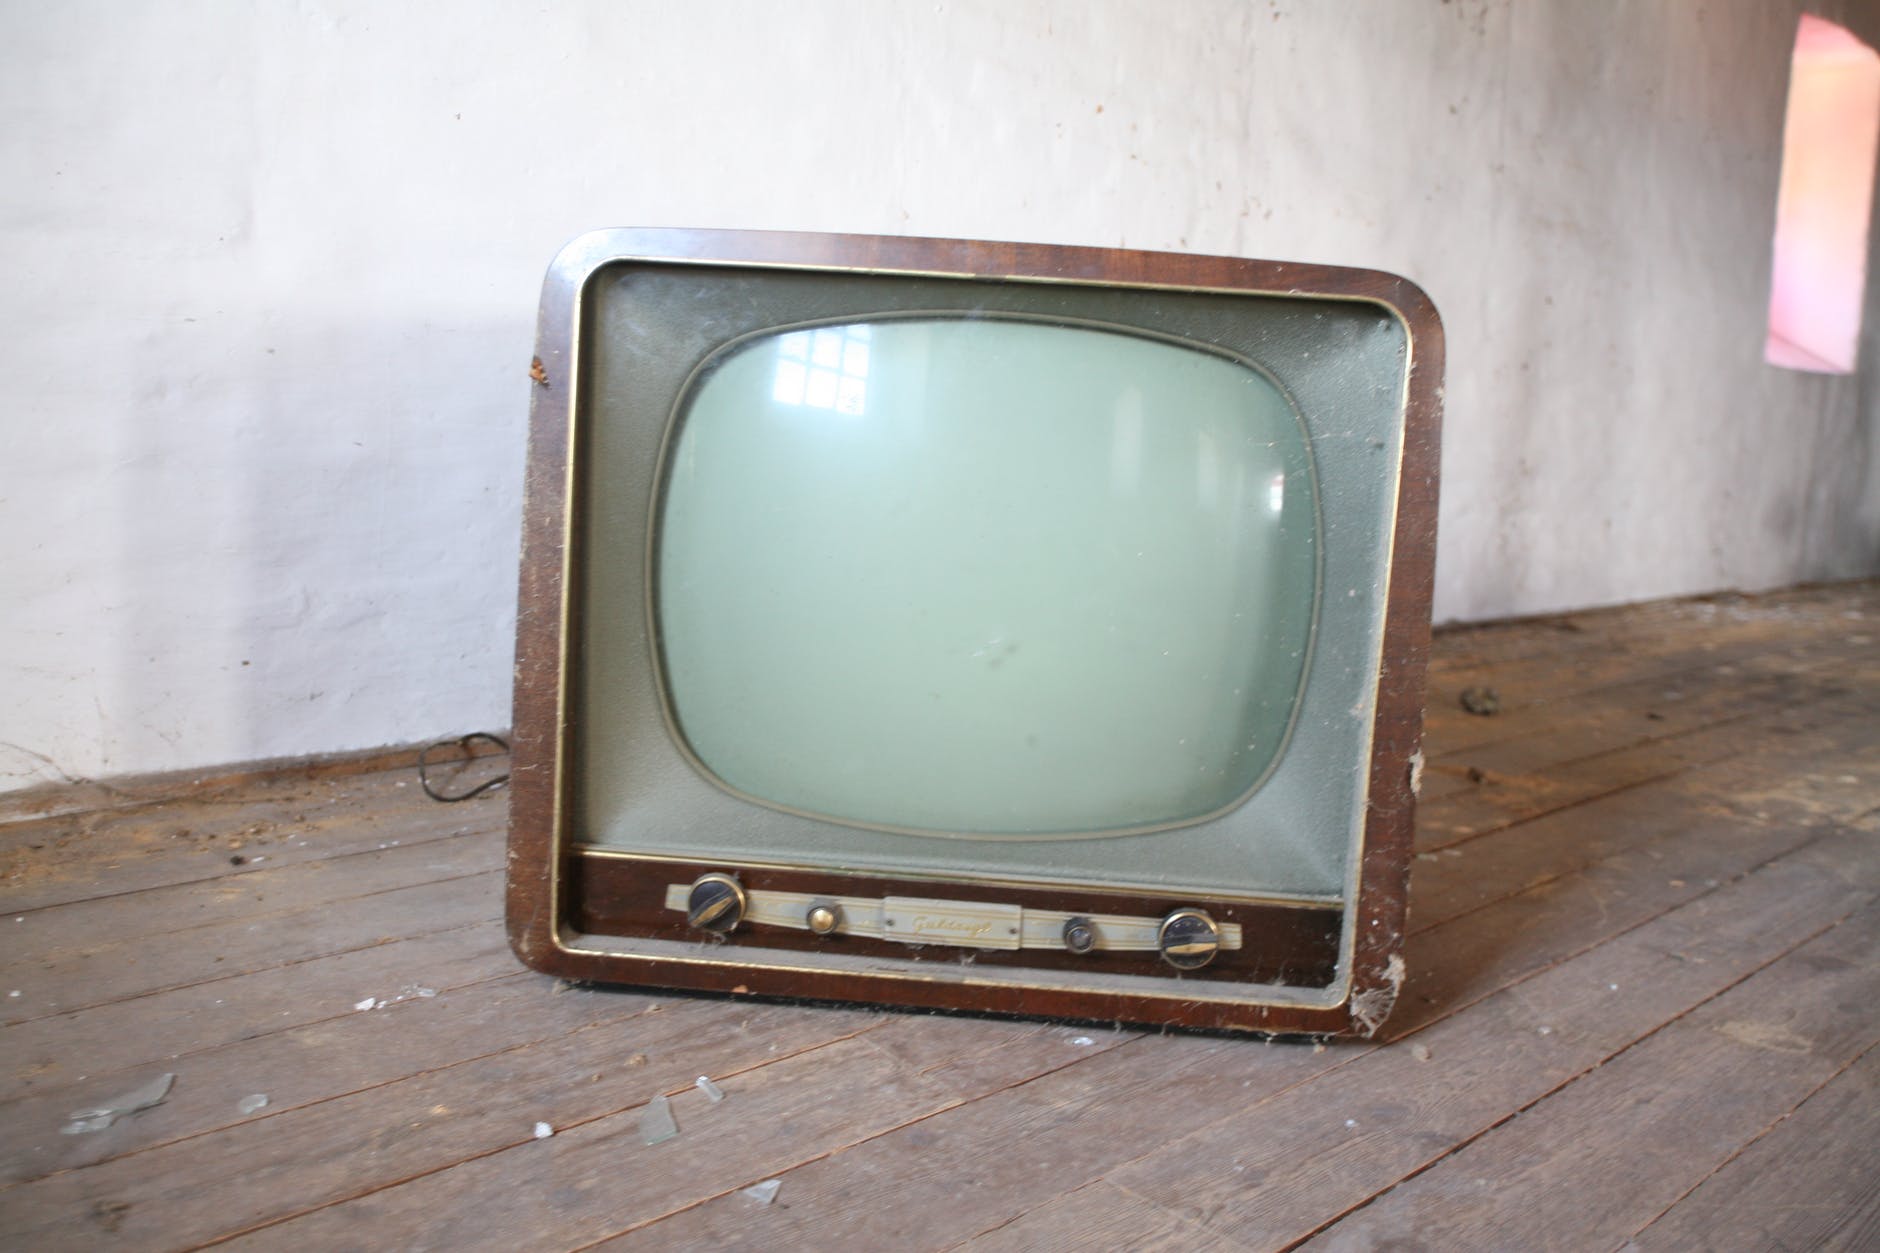 Abandoned antique tv